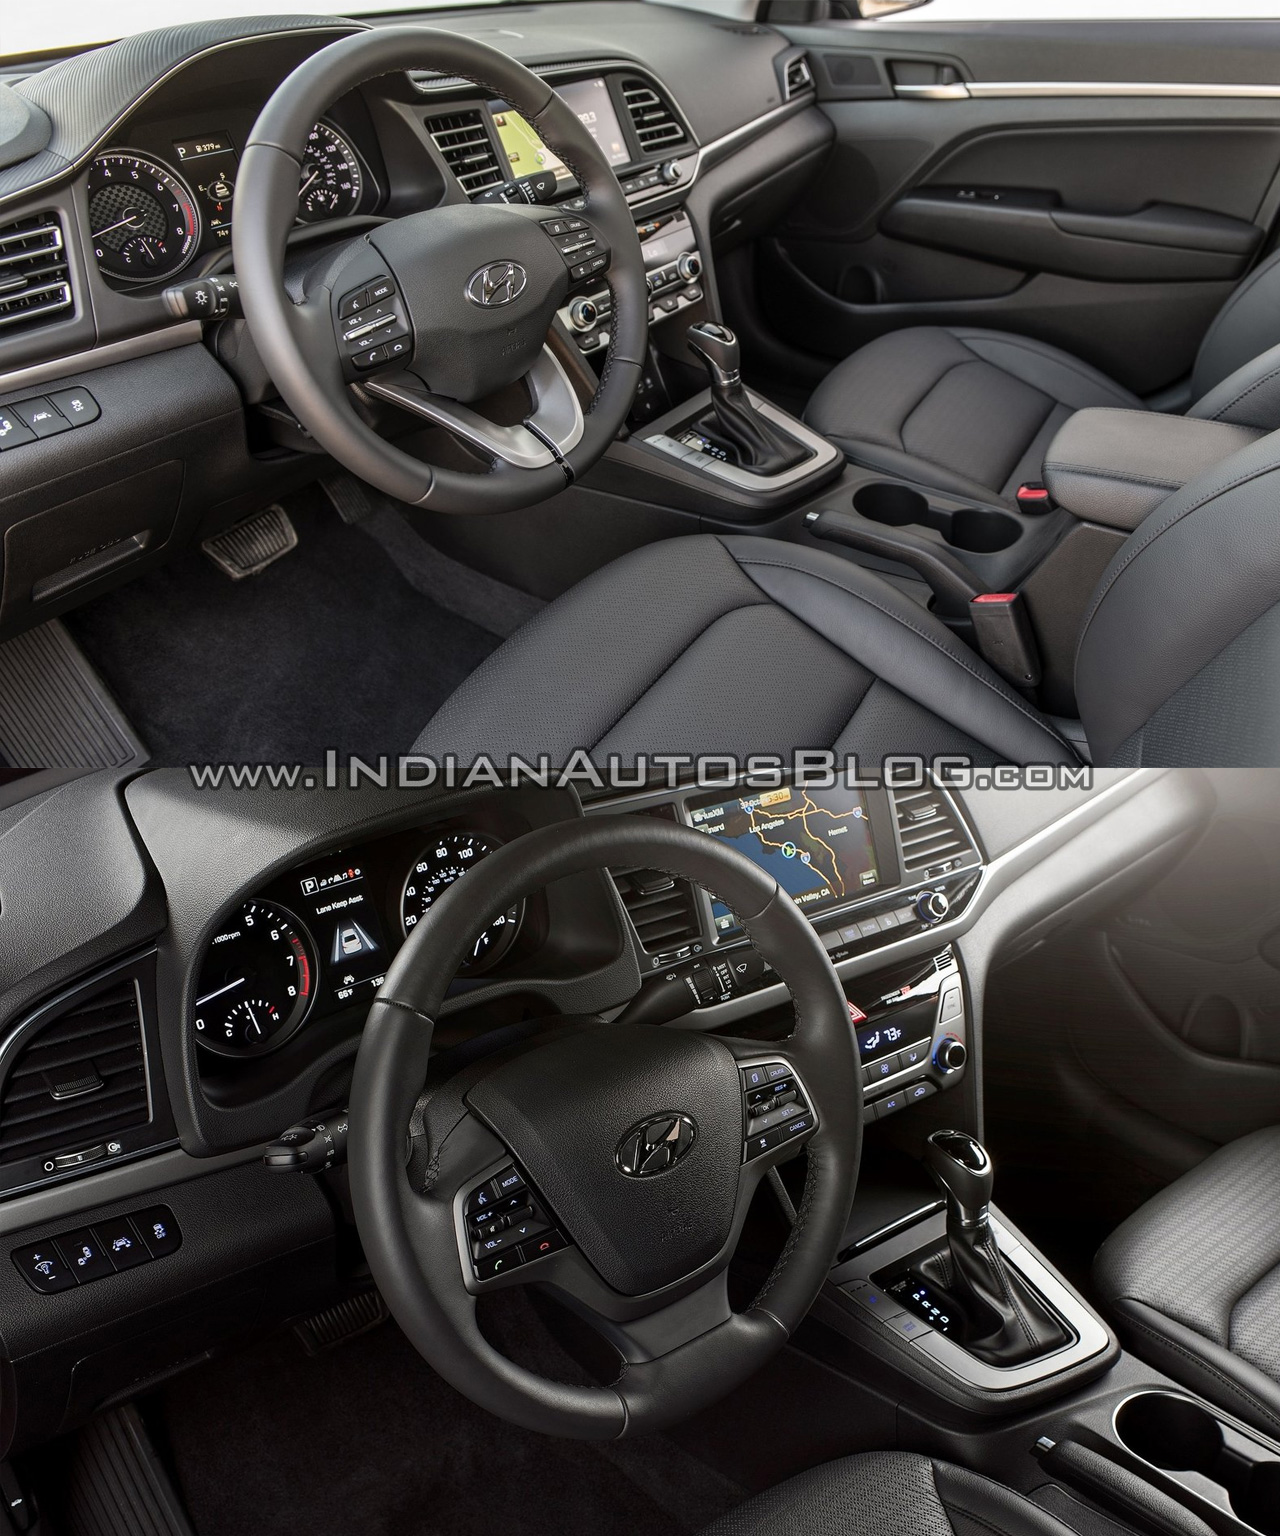 40.6 / 37.3 inches · leg room (front/rear): 2019 Hyundai Elantra Vs 2016 Hyundai Elantra Exterior Interior Amp Specs